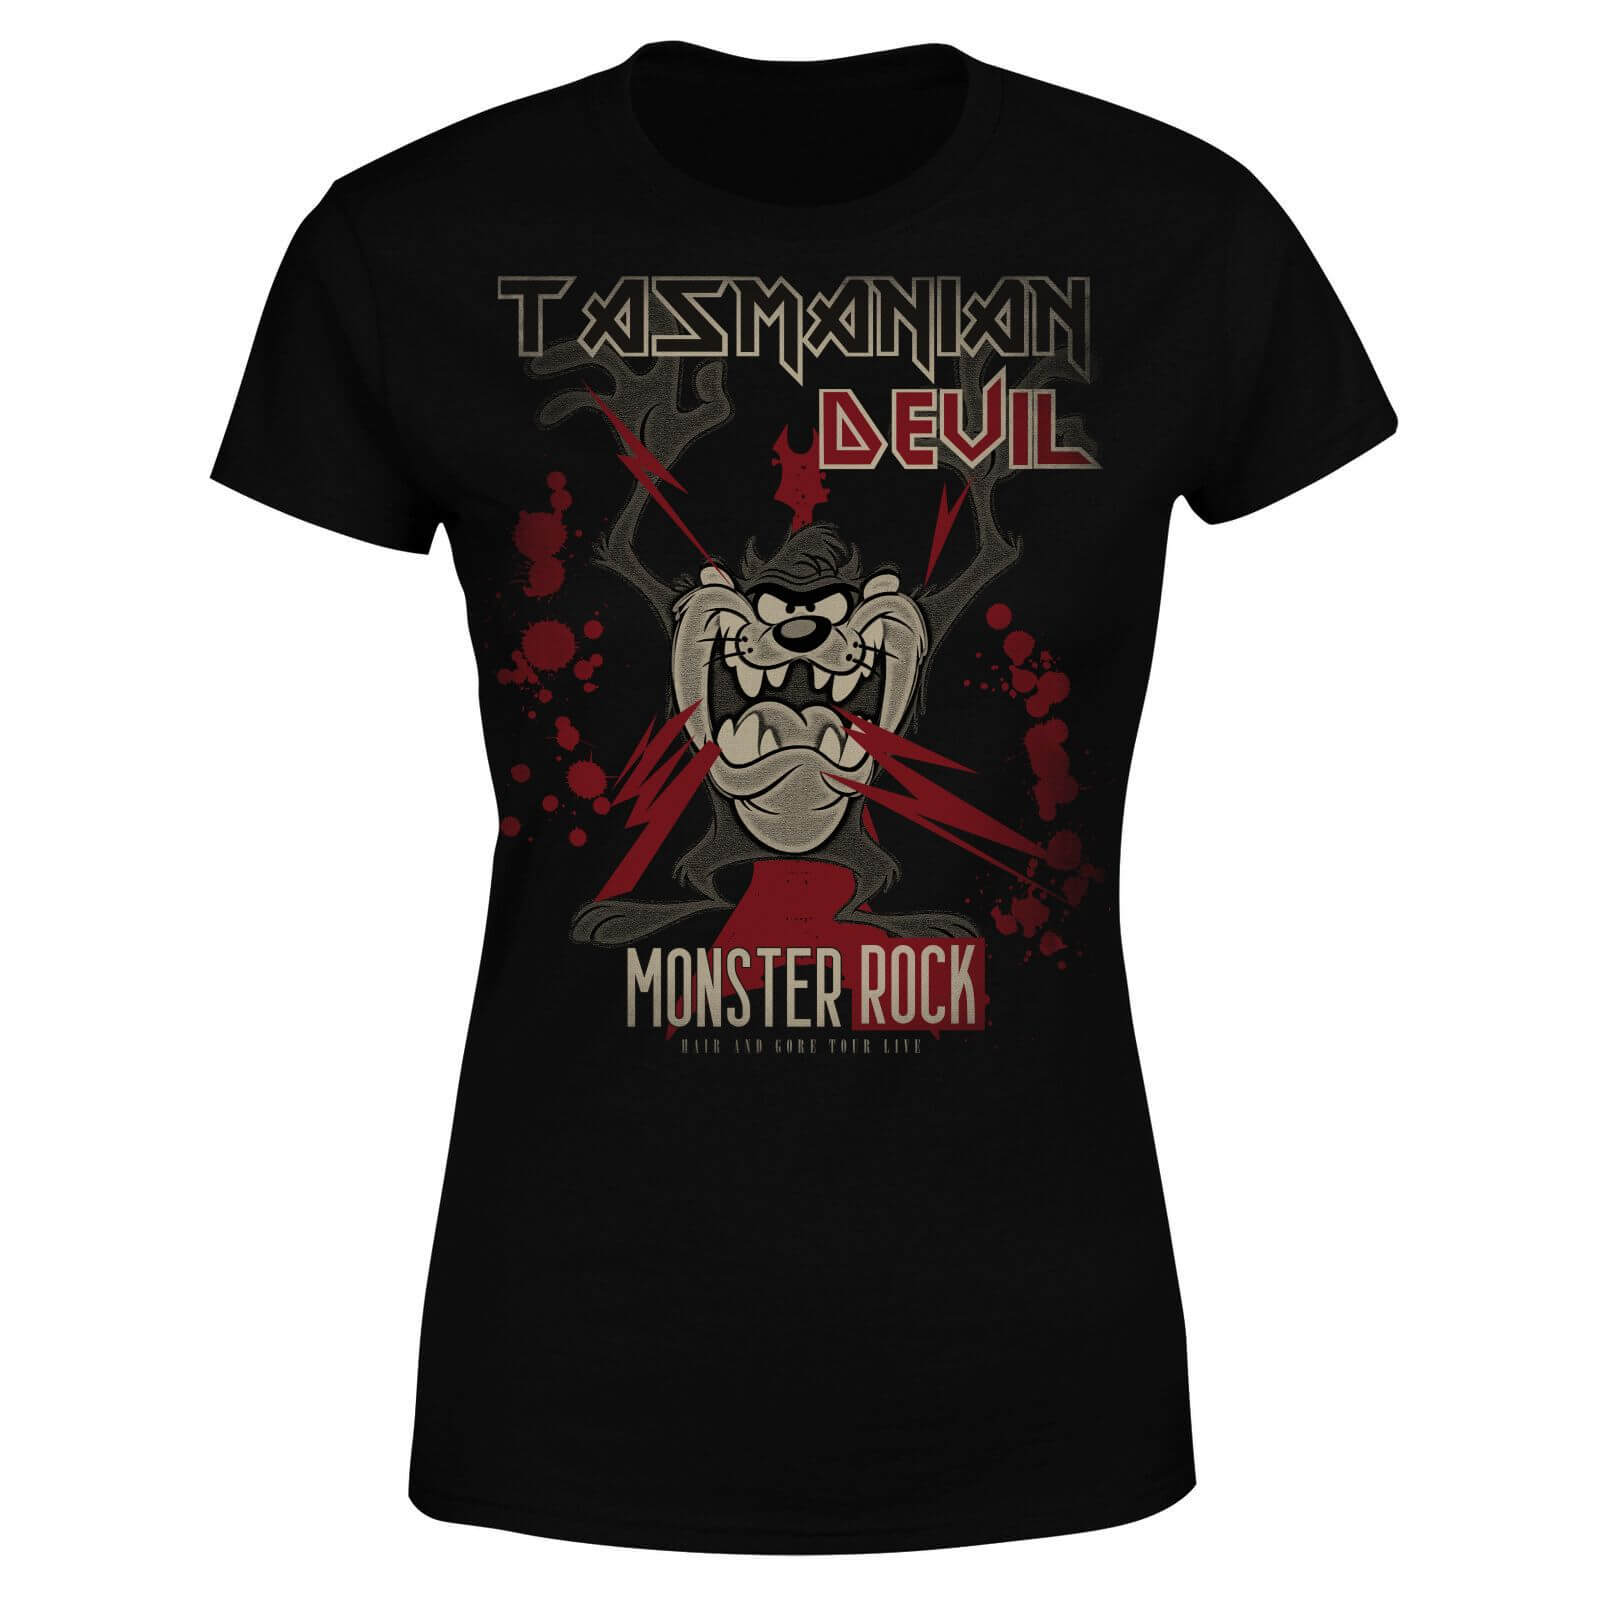 Looney Tunes Tasmanian Devil Monster Rock Women's T-Shirt - Black - 4XL - Black